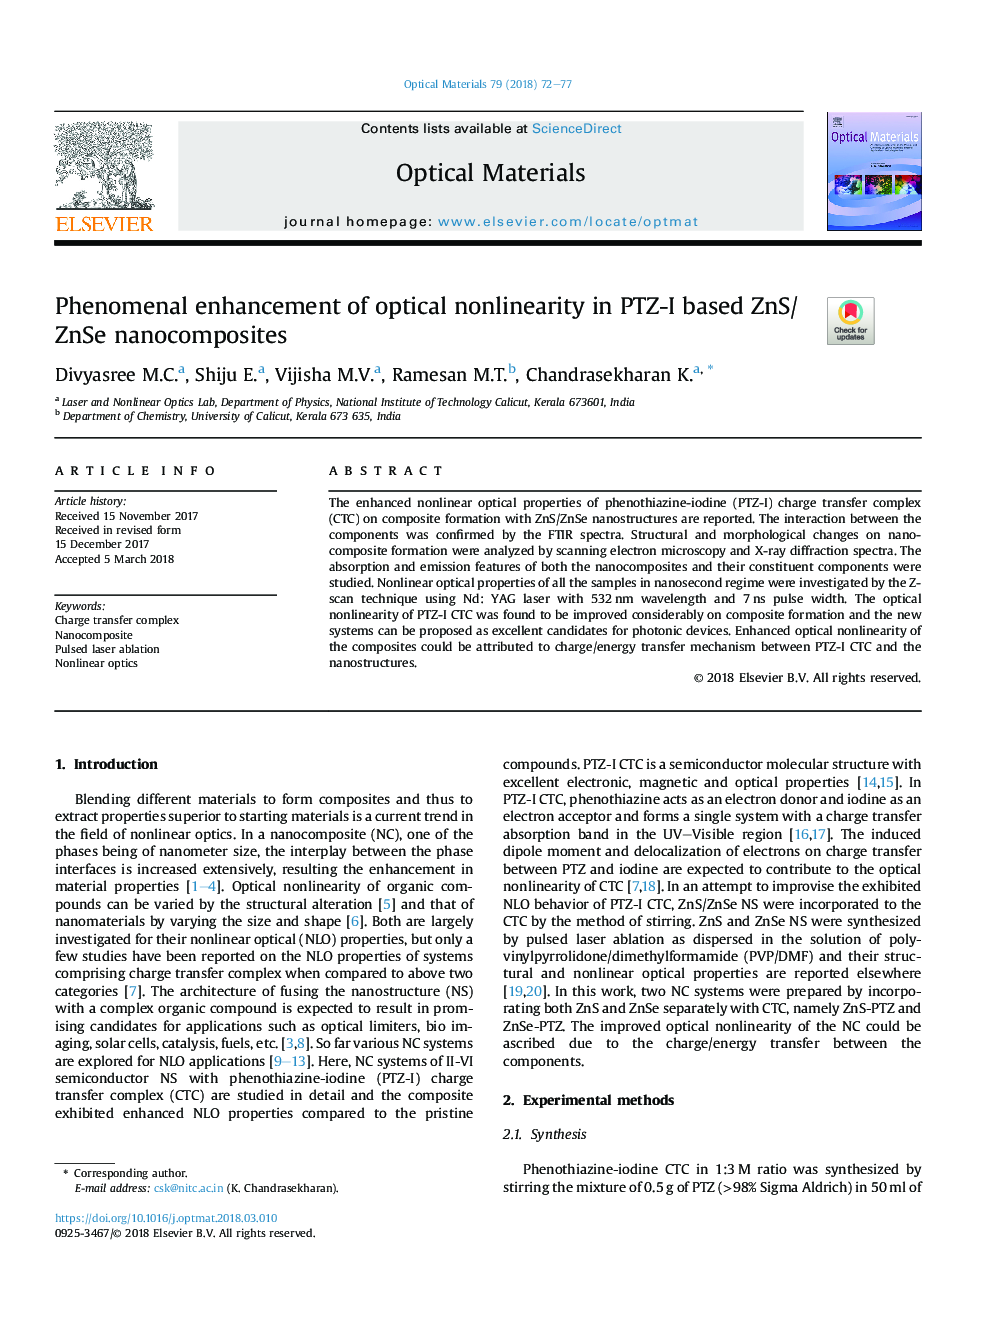 Phenomenal enhancement of optical nonlinearity in PTZ-I based ZnS/ZnSe nanocomposites